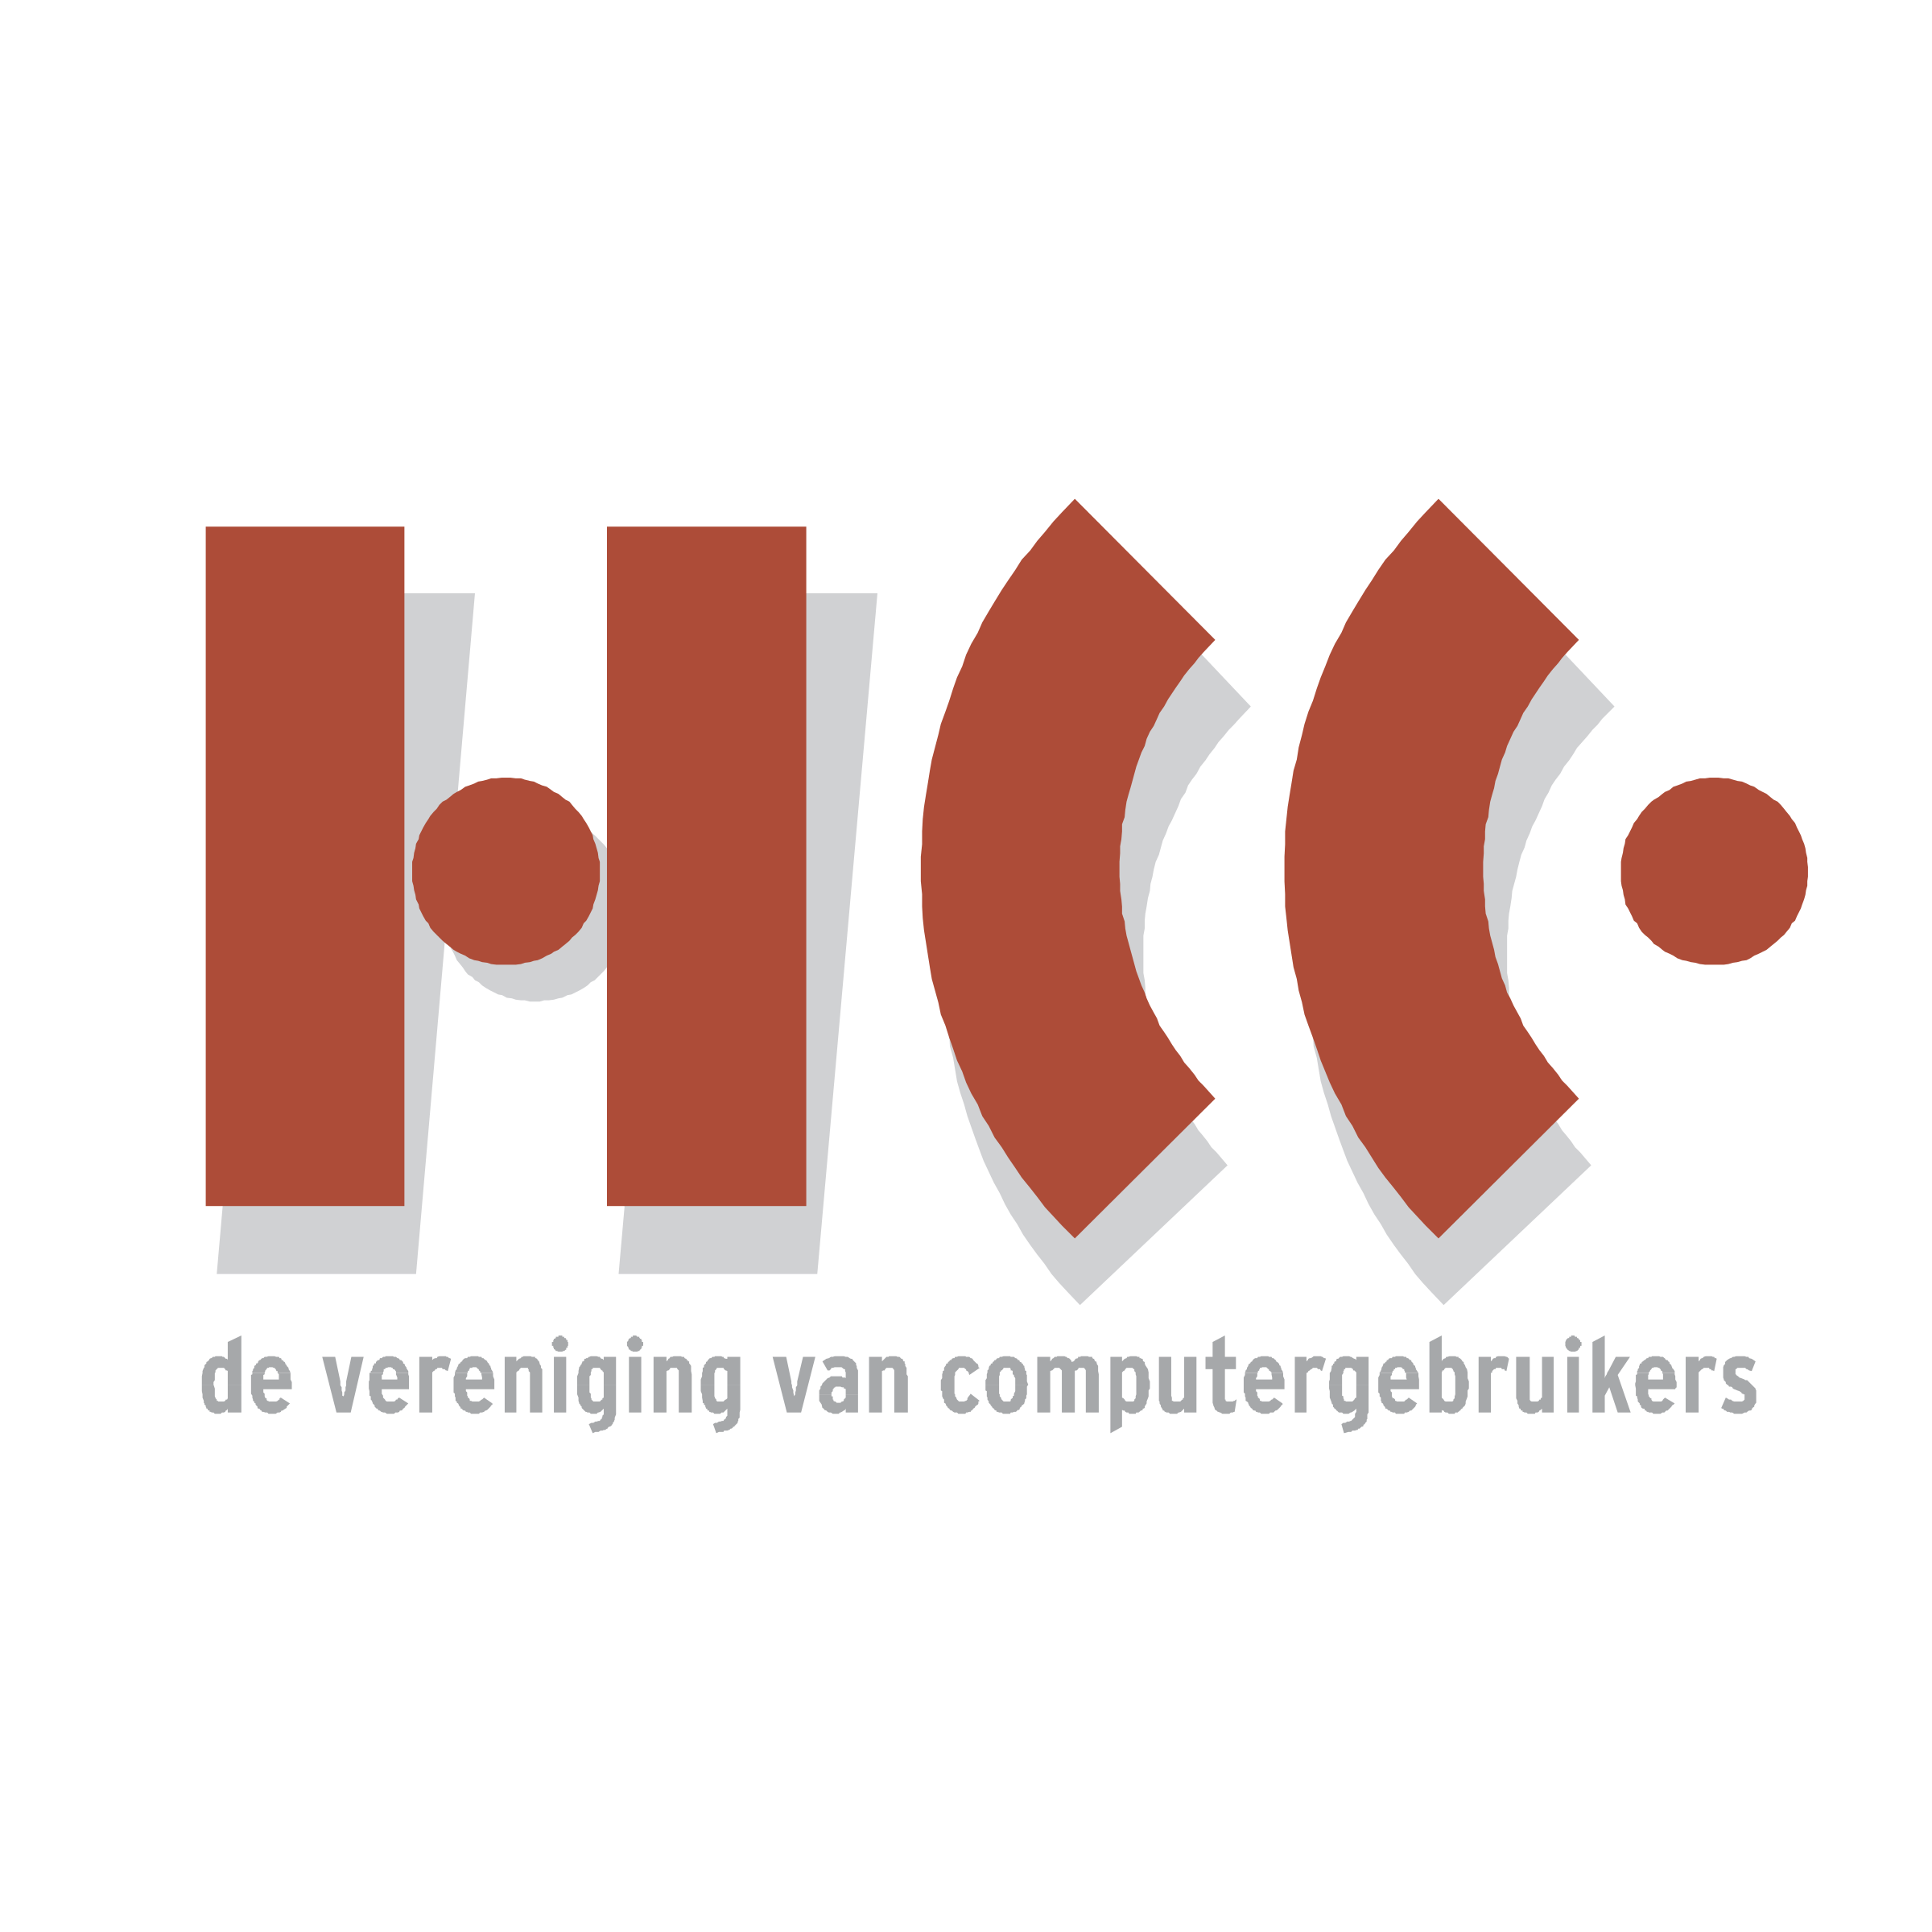 HCC Logo - HCC Logo PNG Transparent & SVG Vector - Freebie Supply